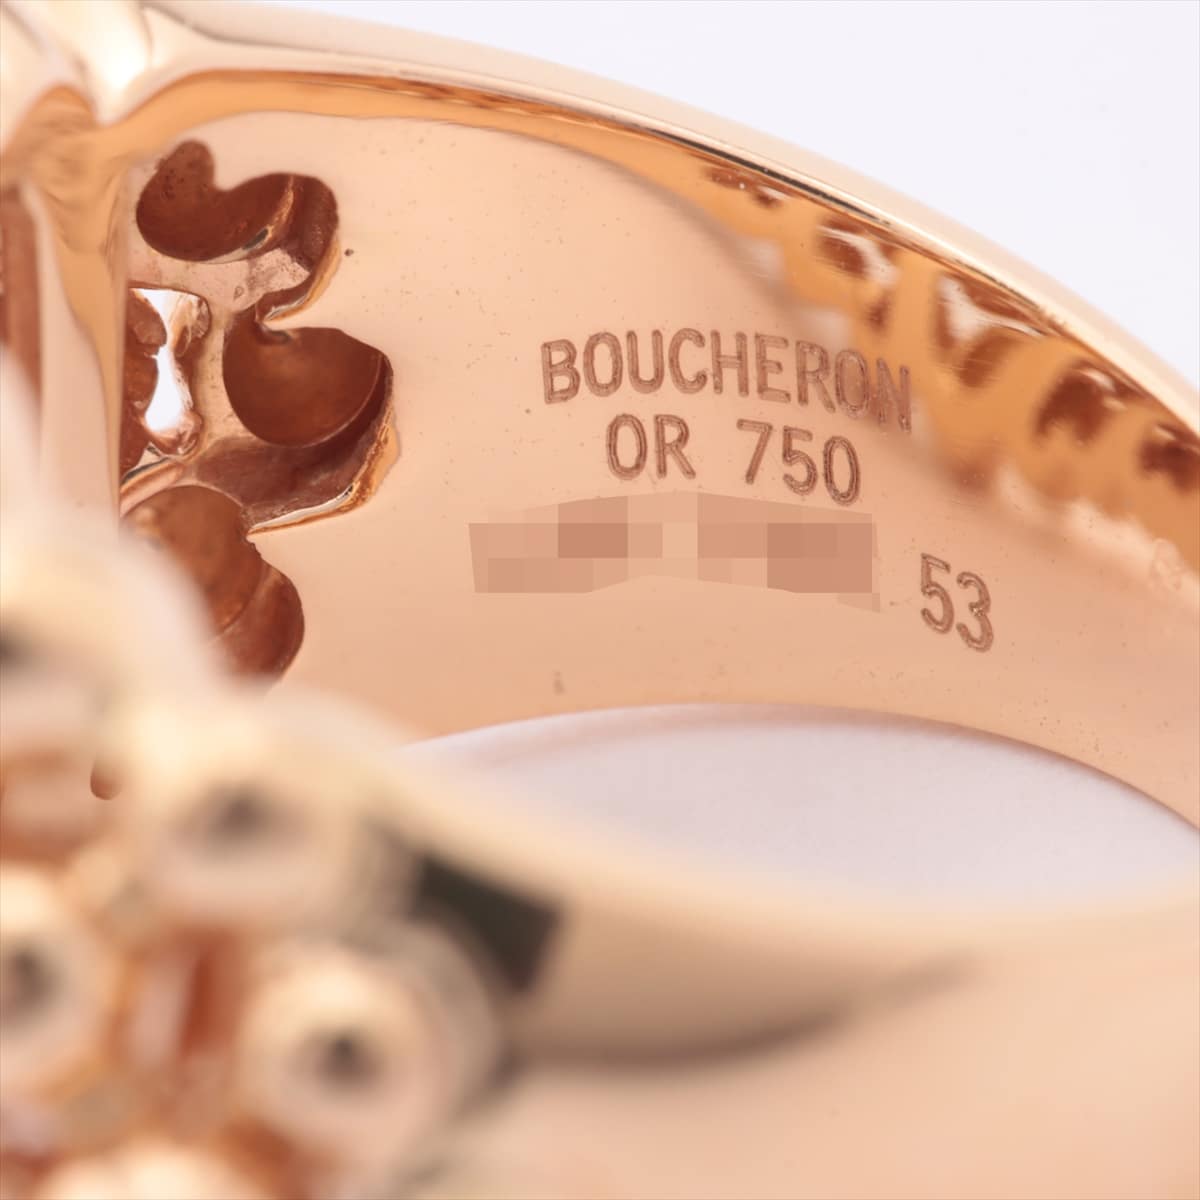 Boucheron Grand Leysin rings 750 PG 15.3g 53